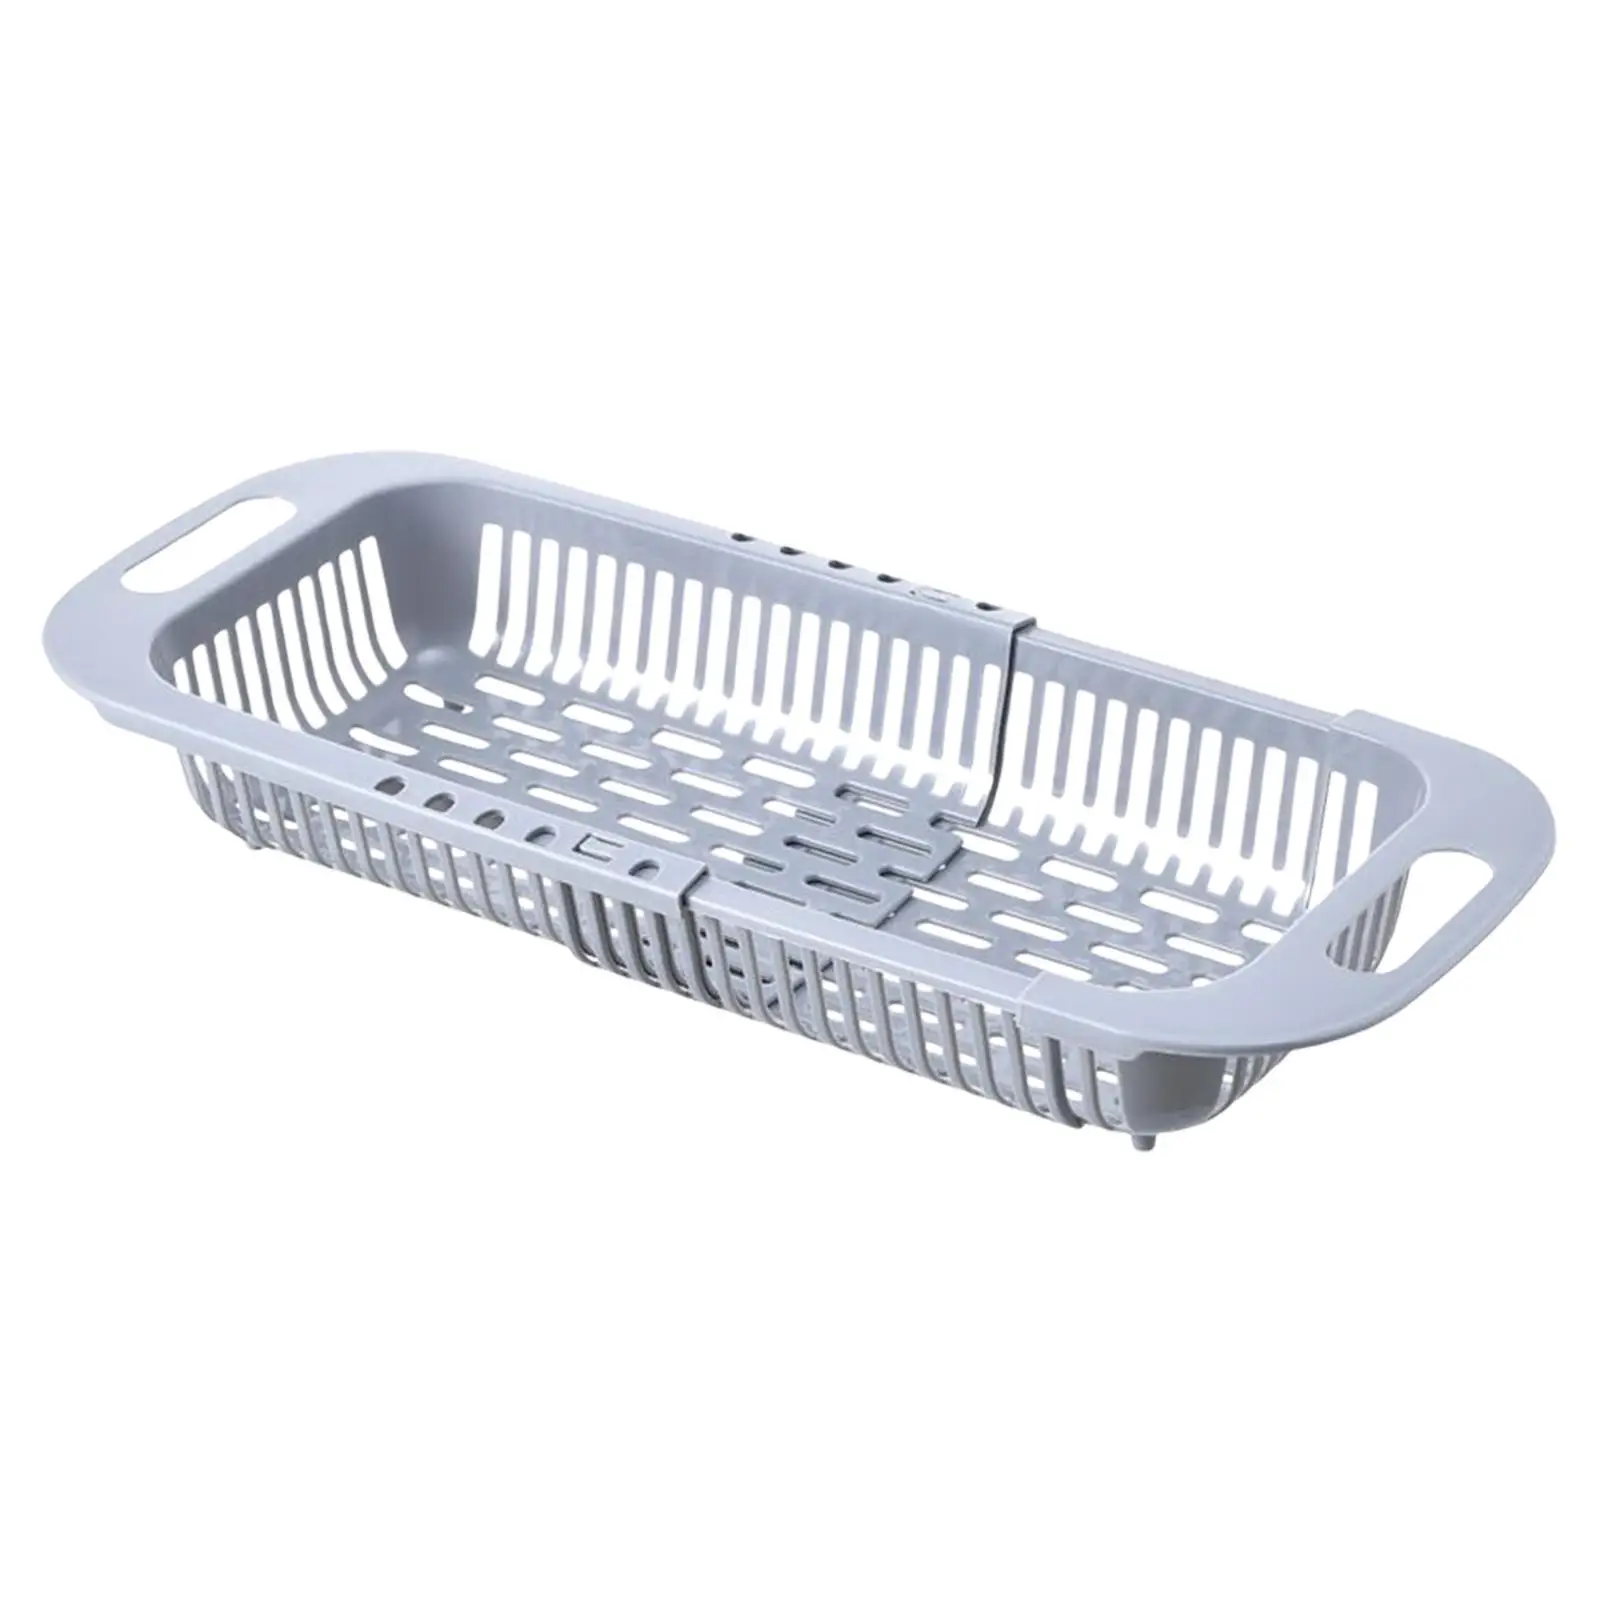 Drain Basket Kitchen Utensil Durable Multipurpose Strainer Basket for Kitchen Dish Cups